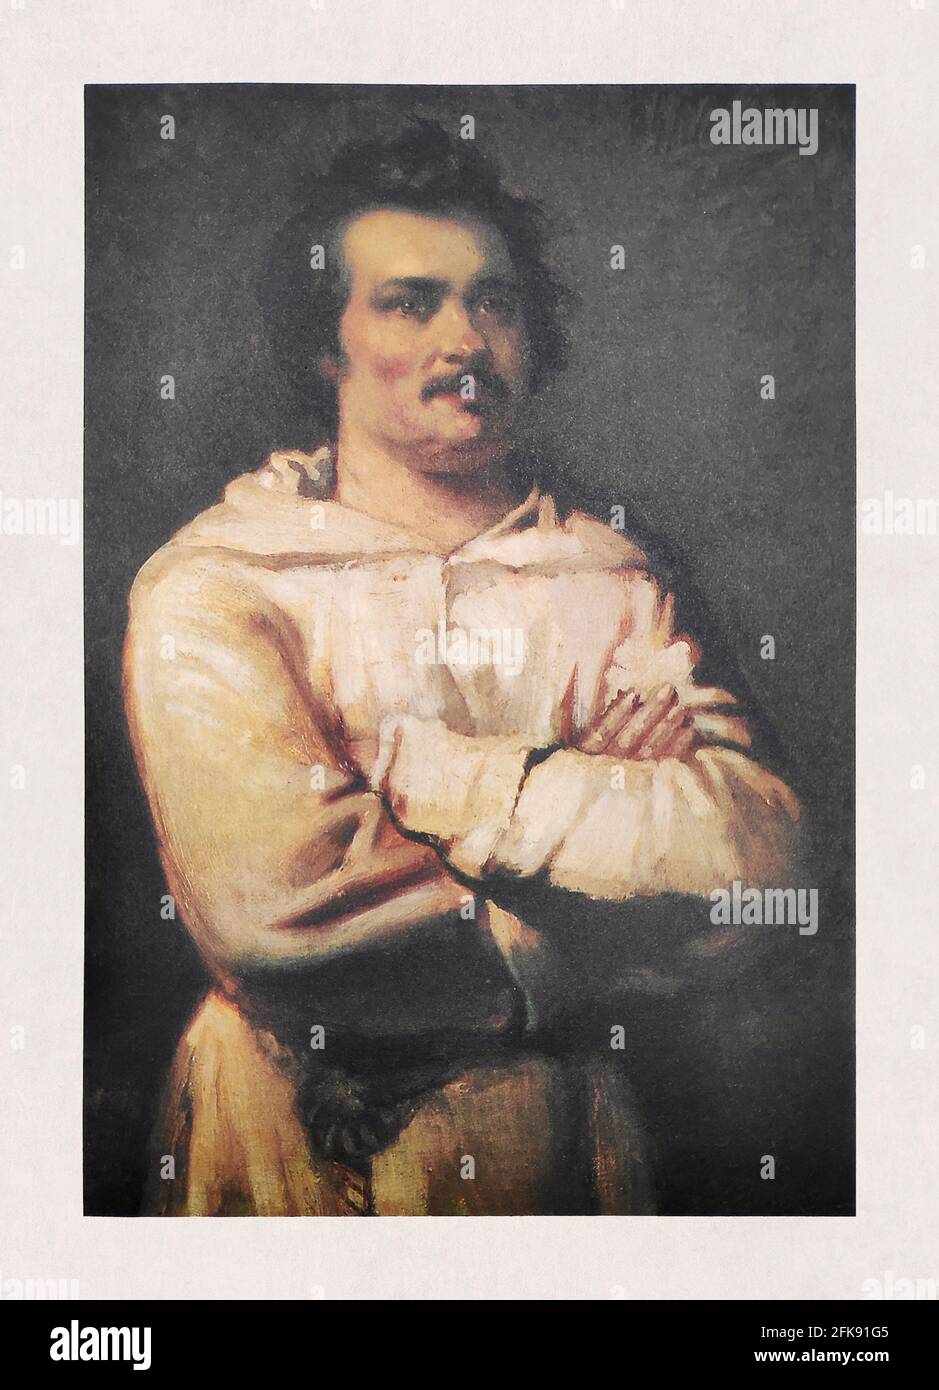 Portrait of Honoré de Balzac made by Louis Boulanger in 1836 Stock Photo